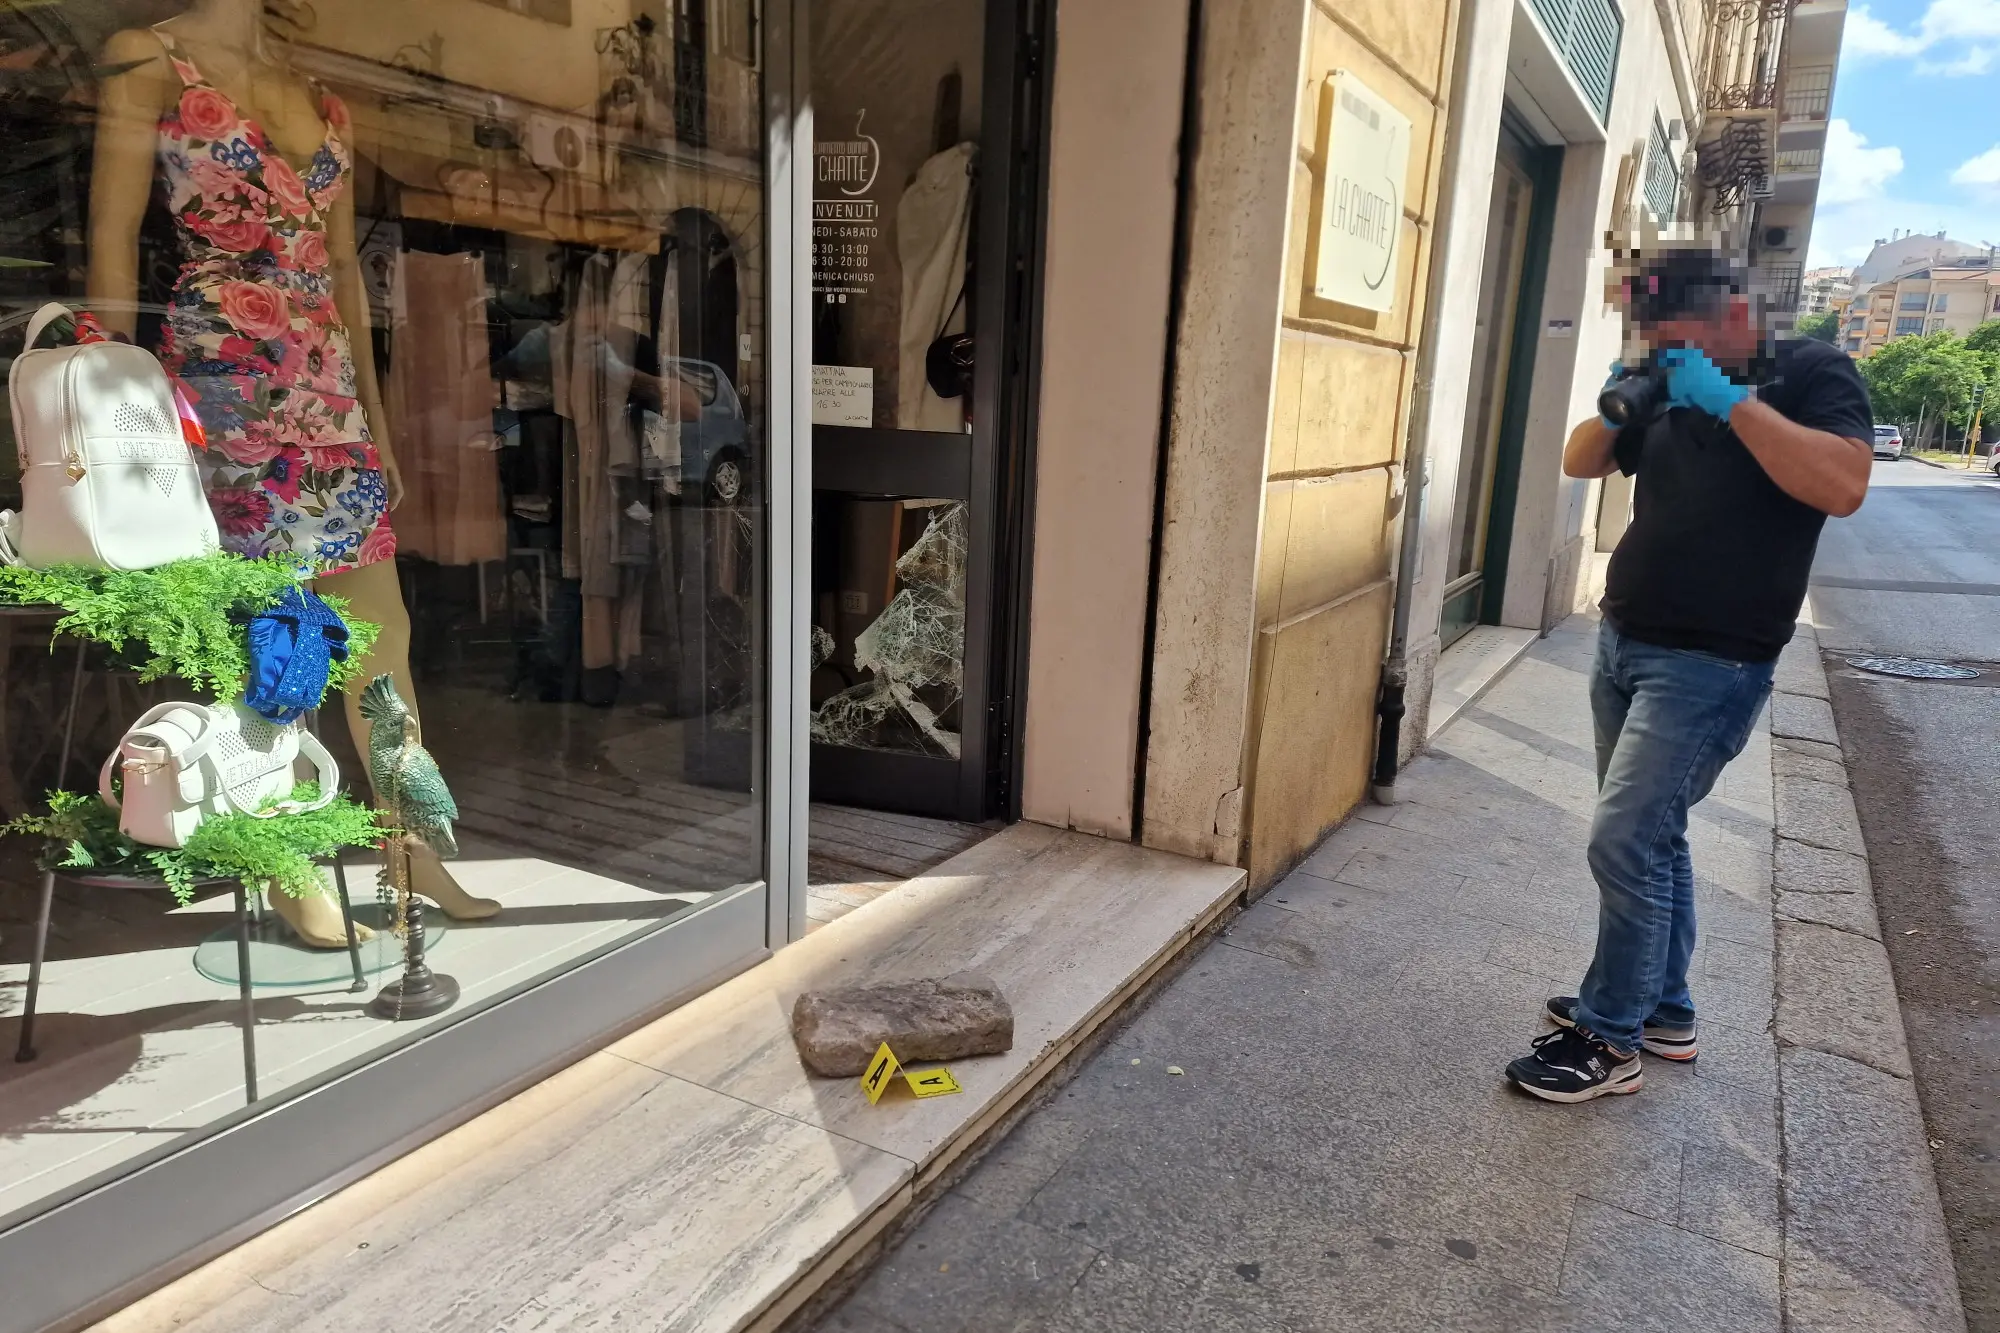 La pietra lanciata contro il negozio (foto Floris)